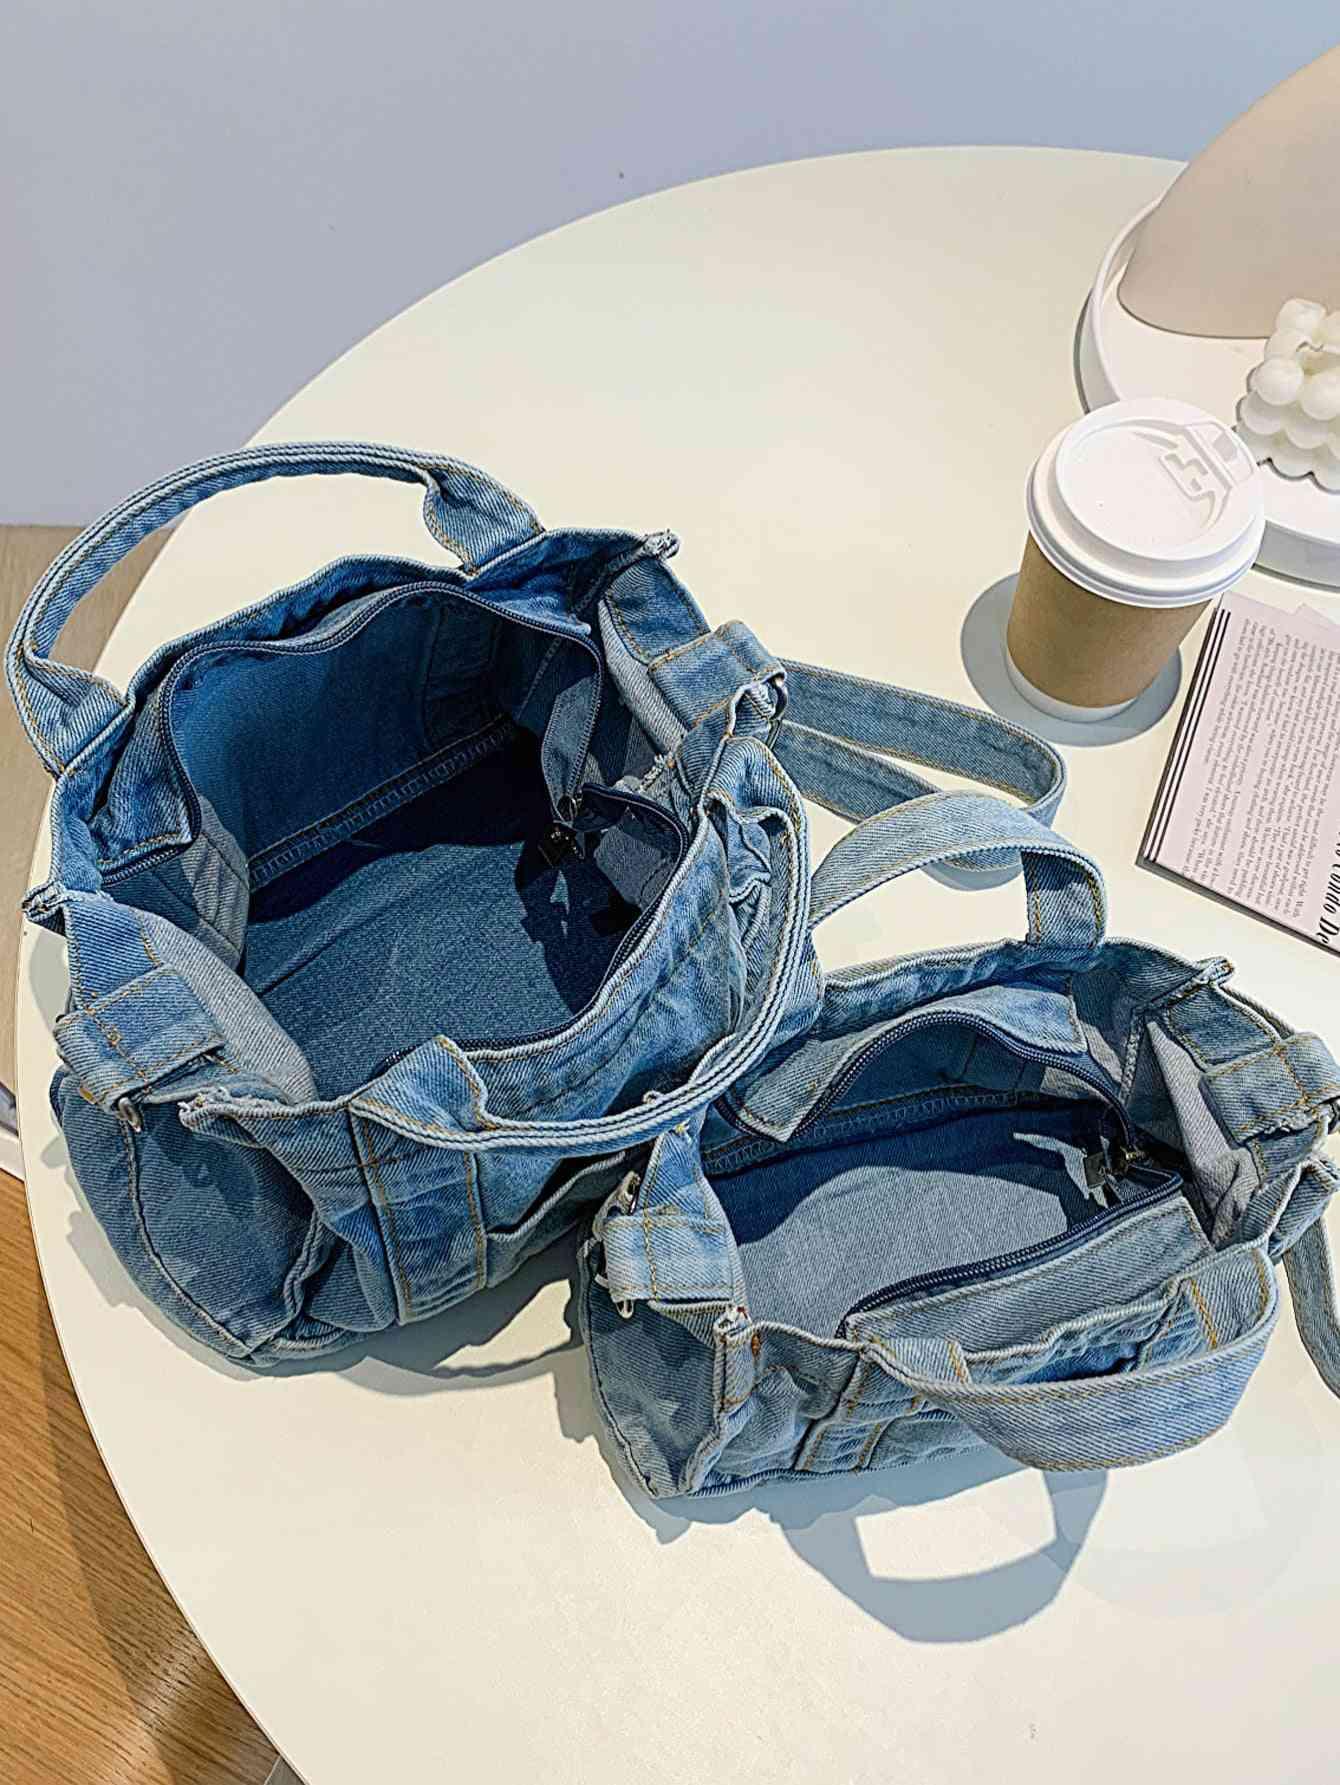 Denim Shoulder Bag by Adored - Closet of Ren